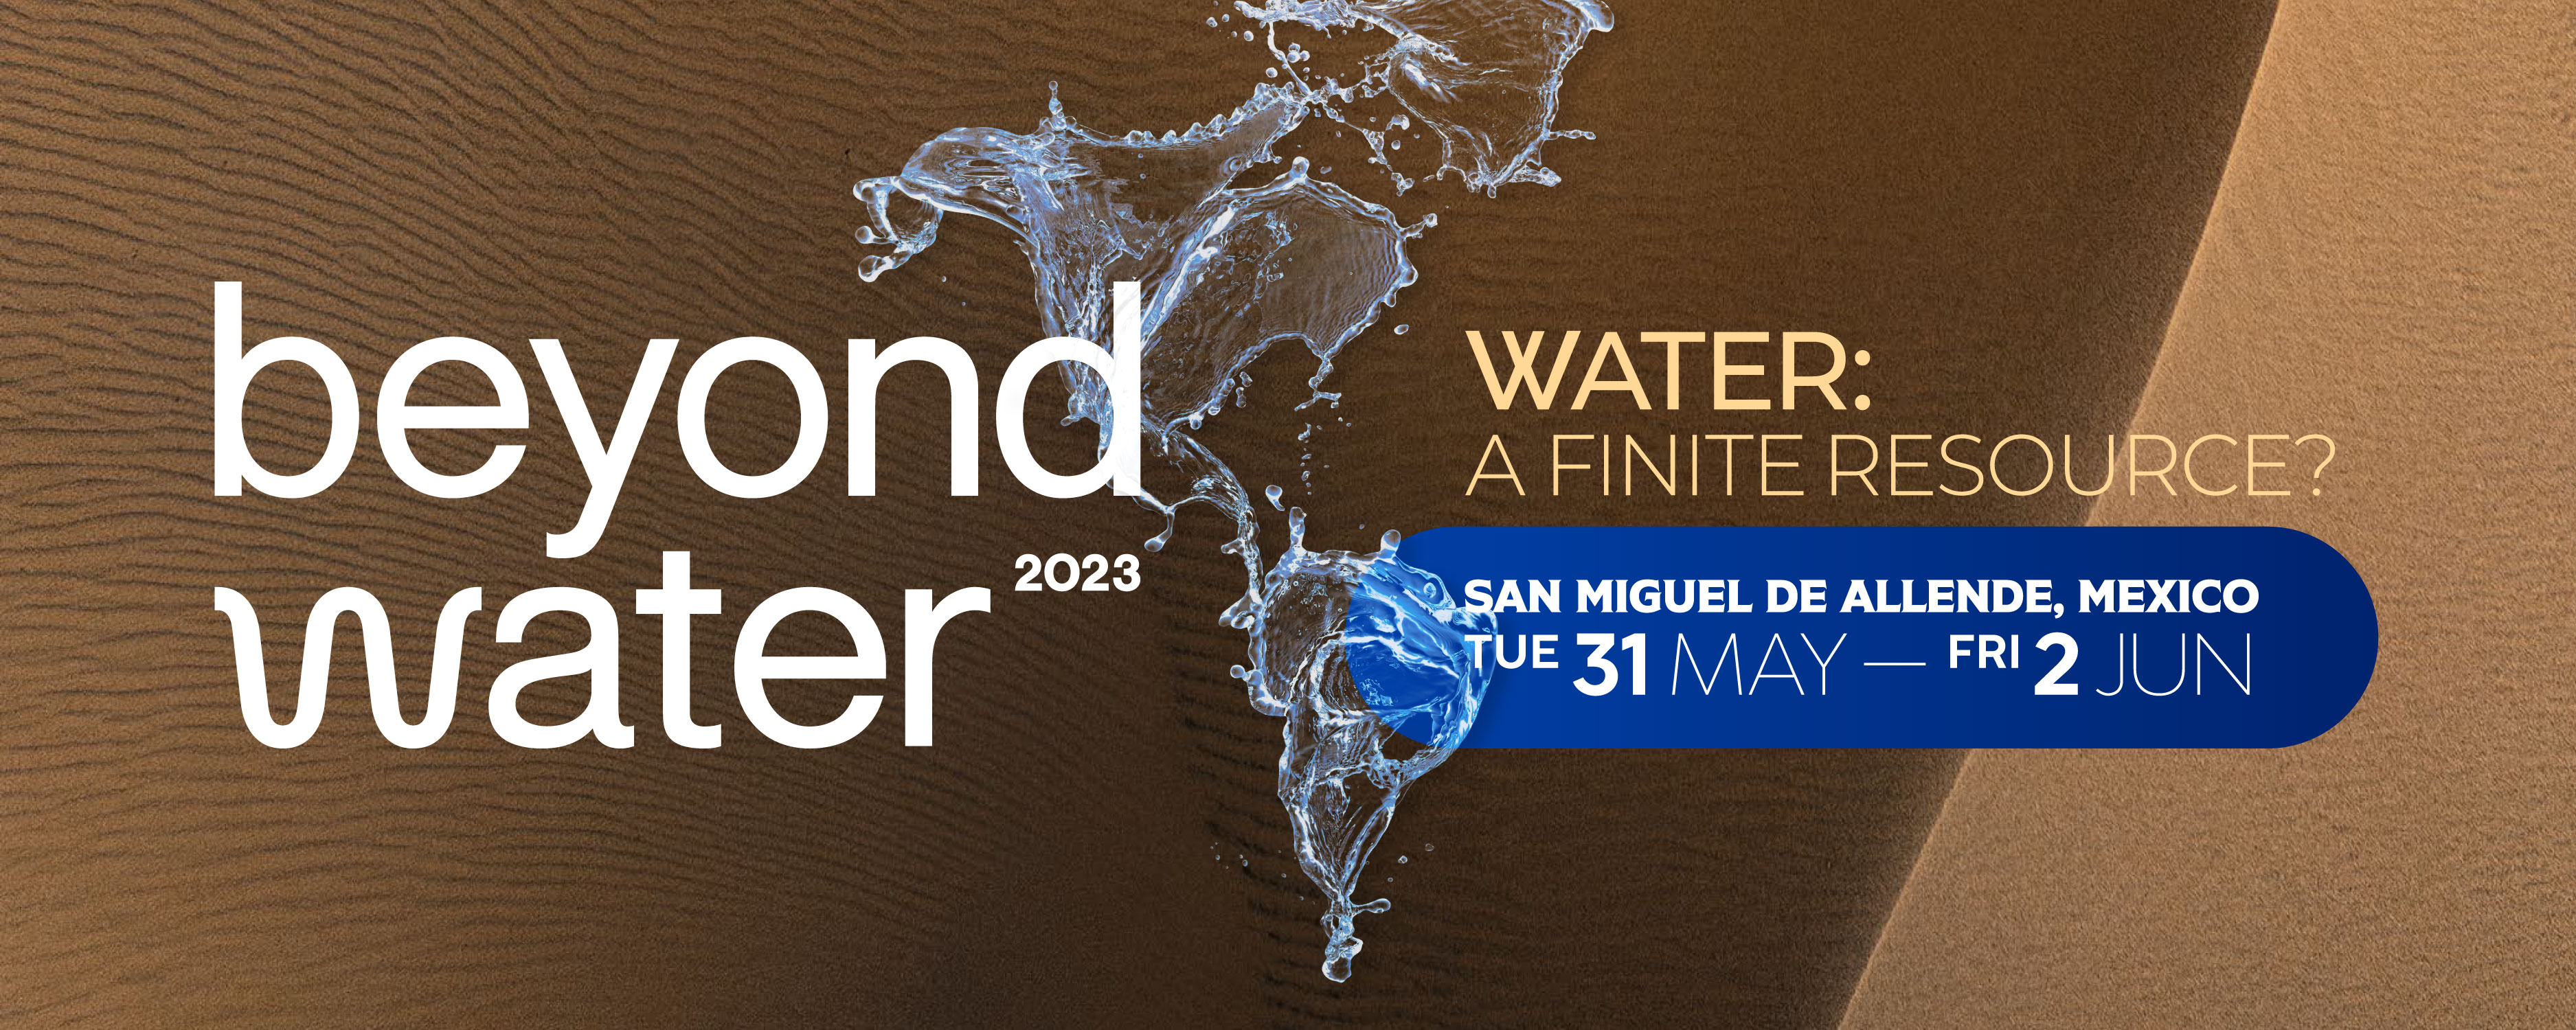 Beyond Water 2021